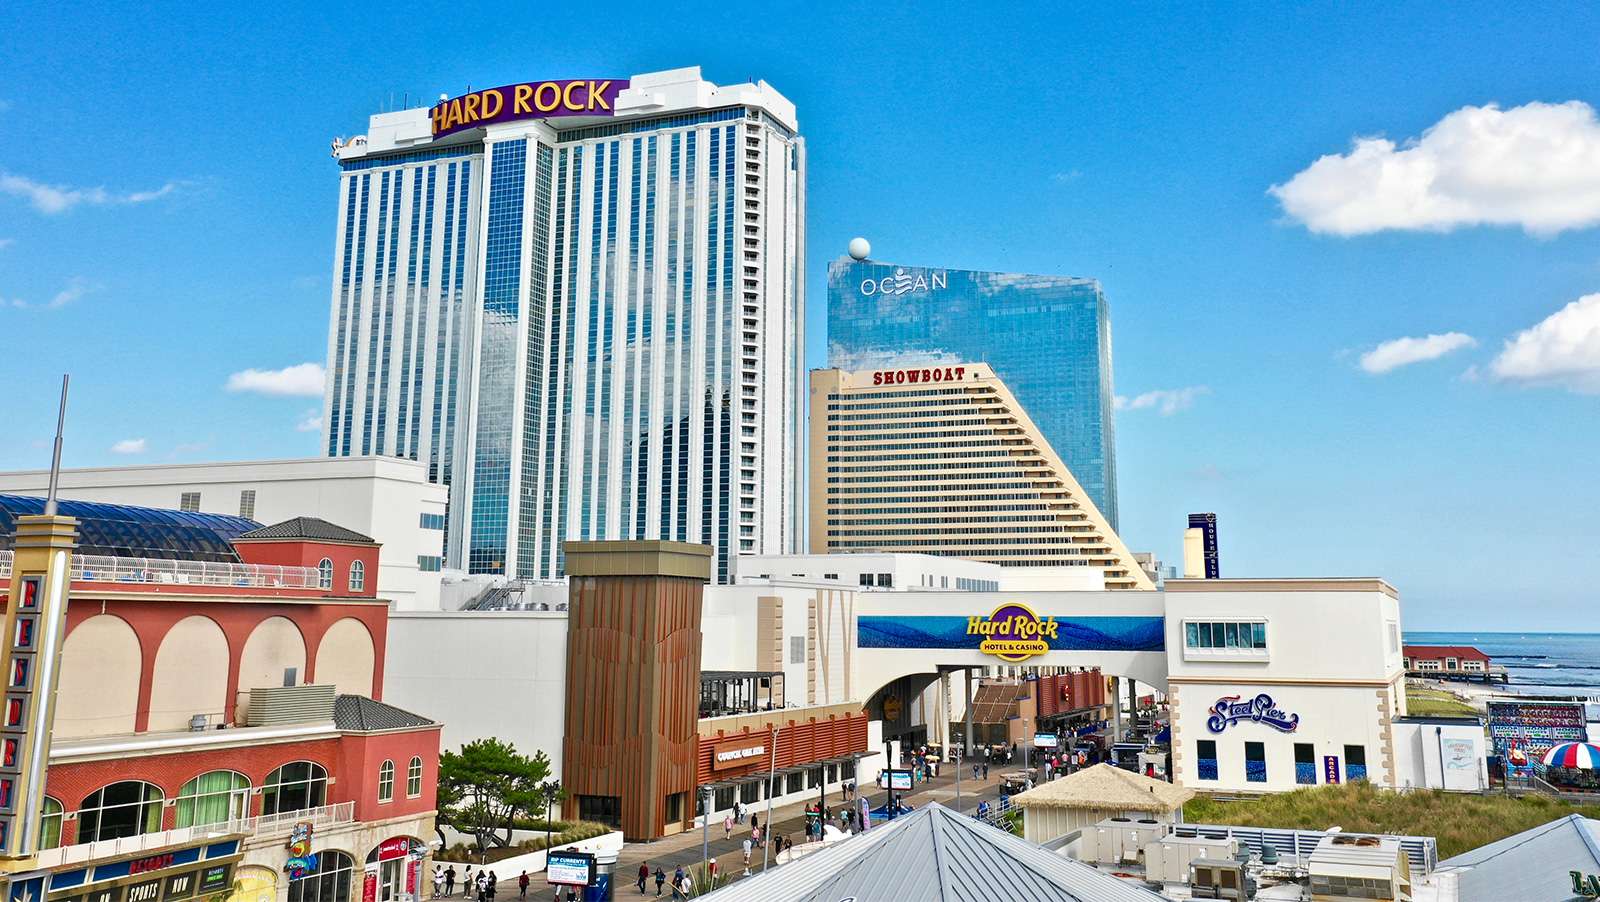 Atlantic City casinos PILOT property tax